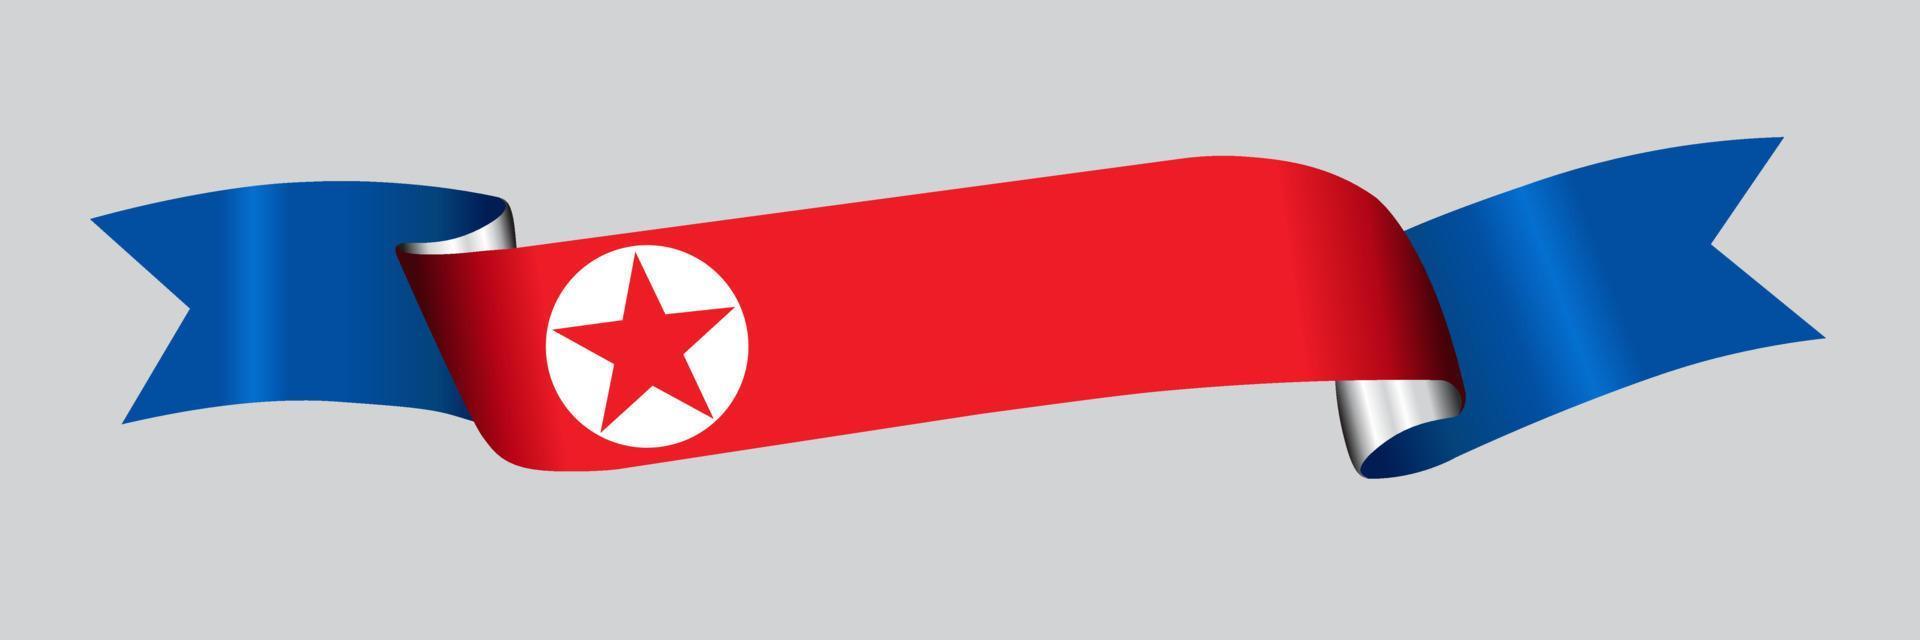 3D Flag of North Korea on ribbon. vector